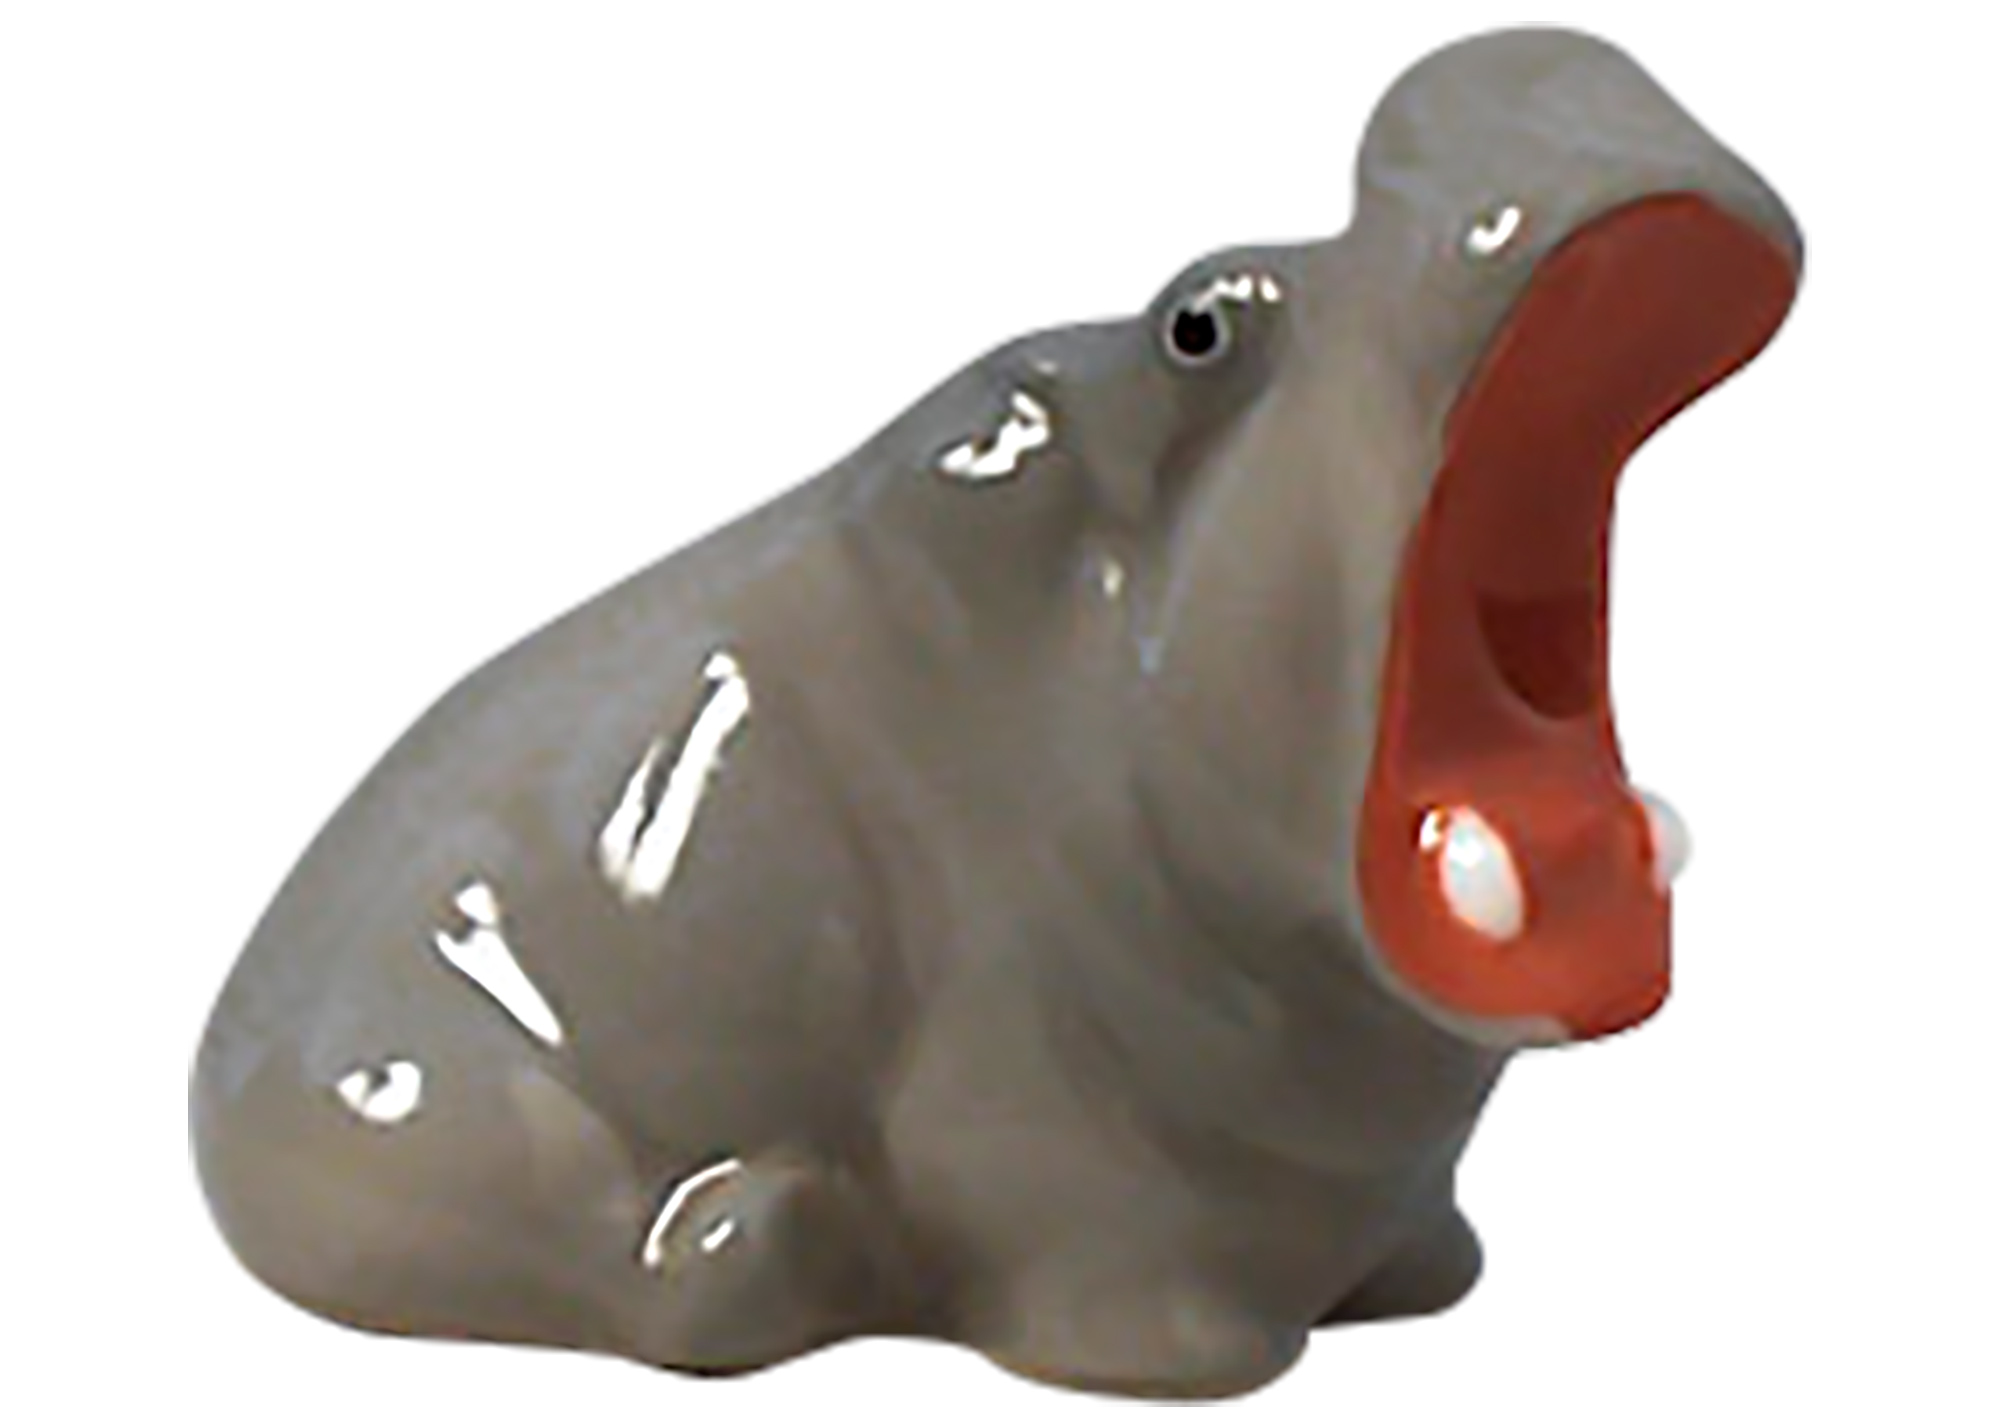 Buy Small Hippo Figurine at GoldenCockerel.com